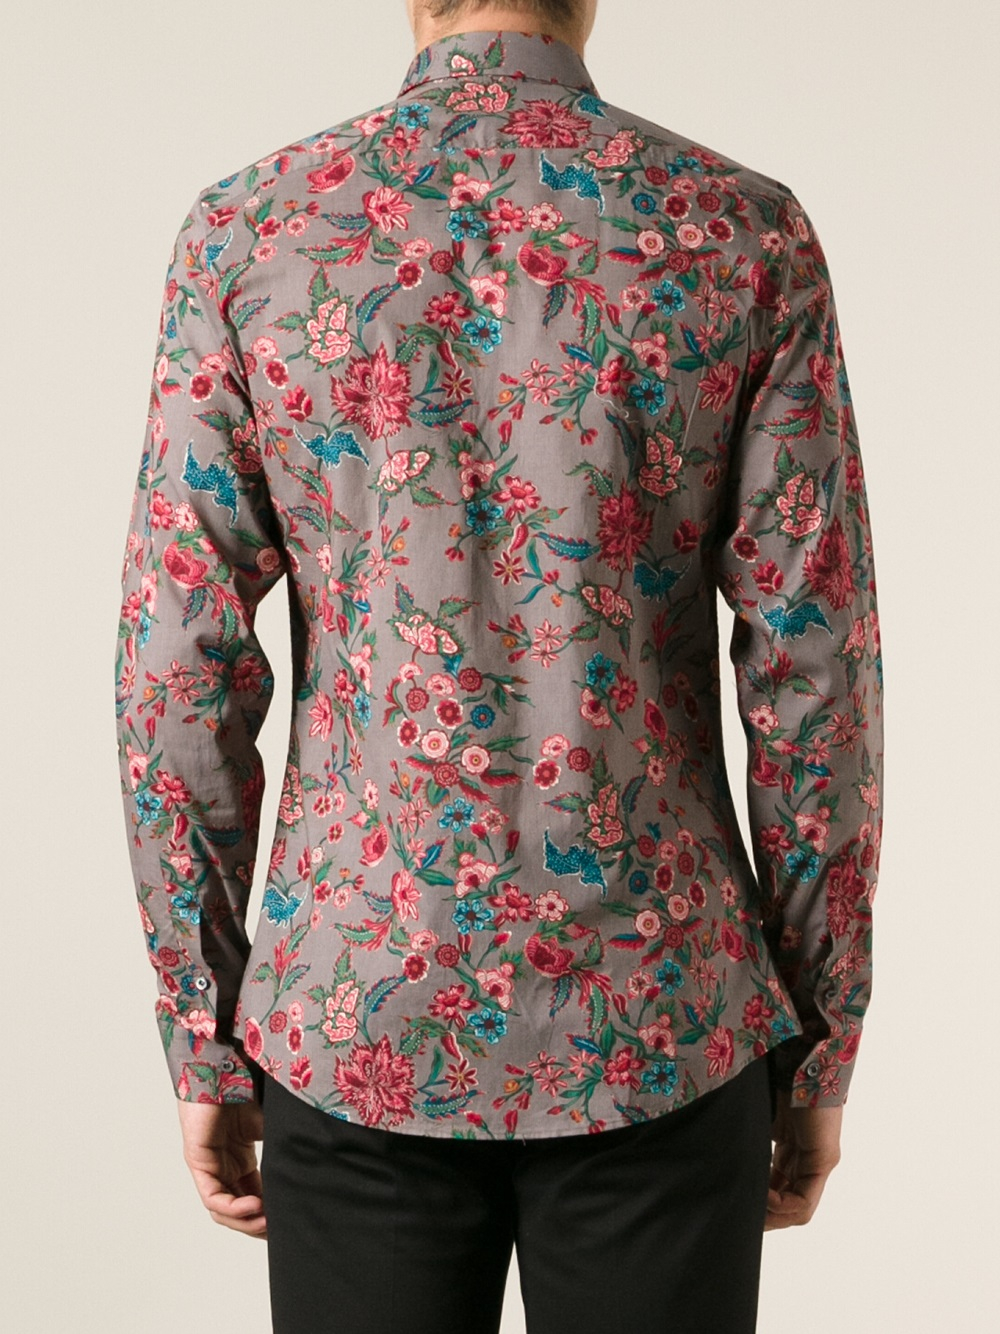 Gucci Men's Floral Shirt